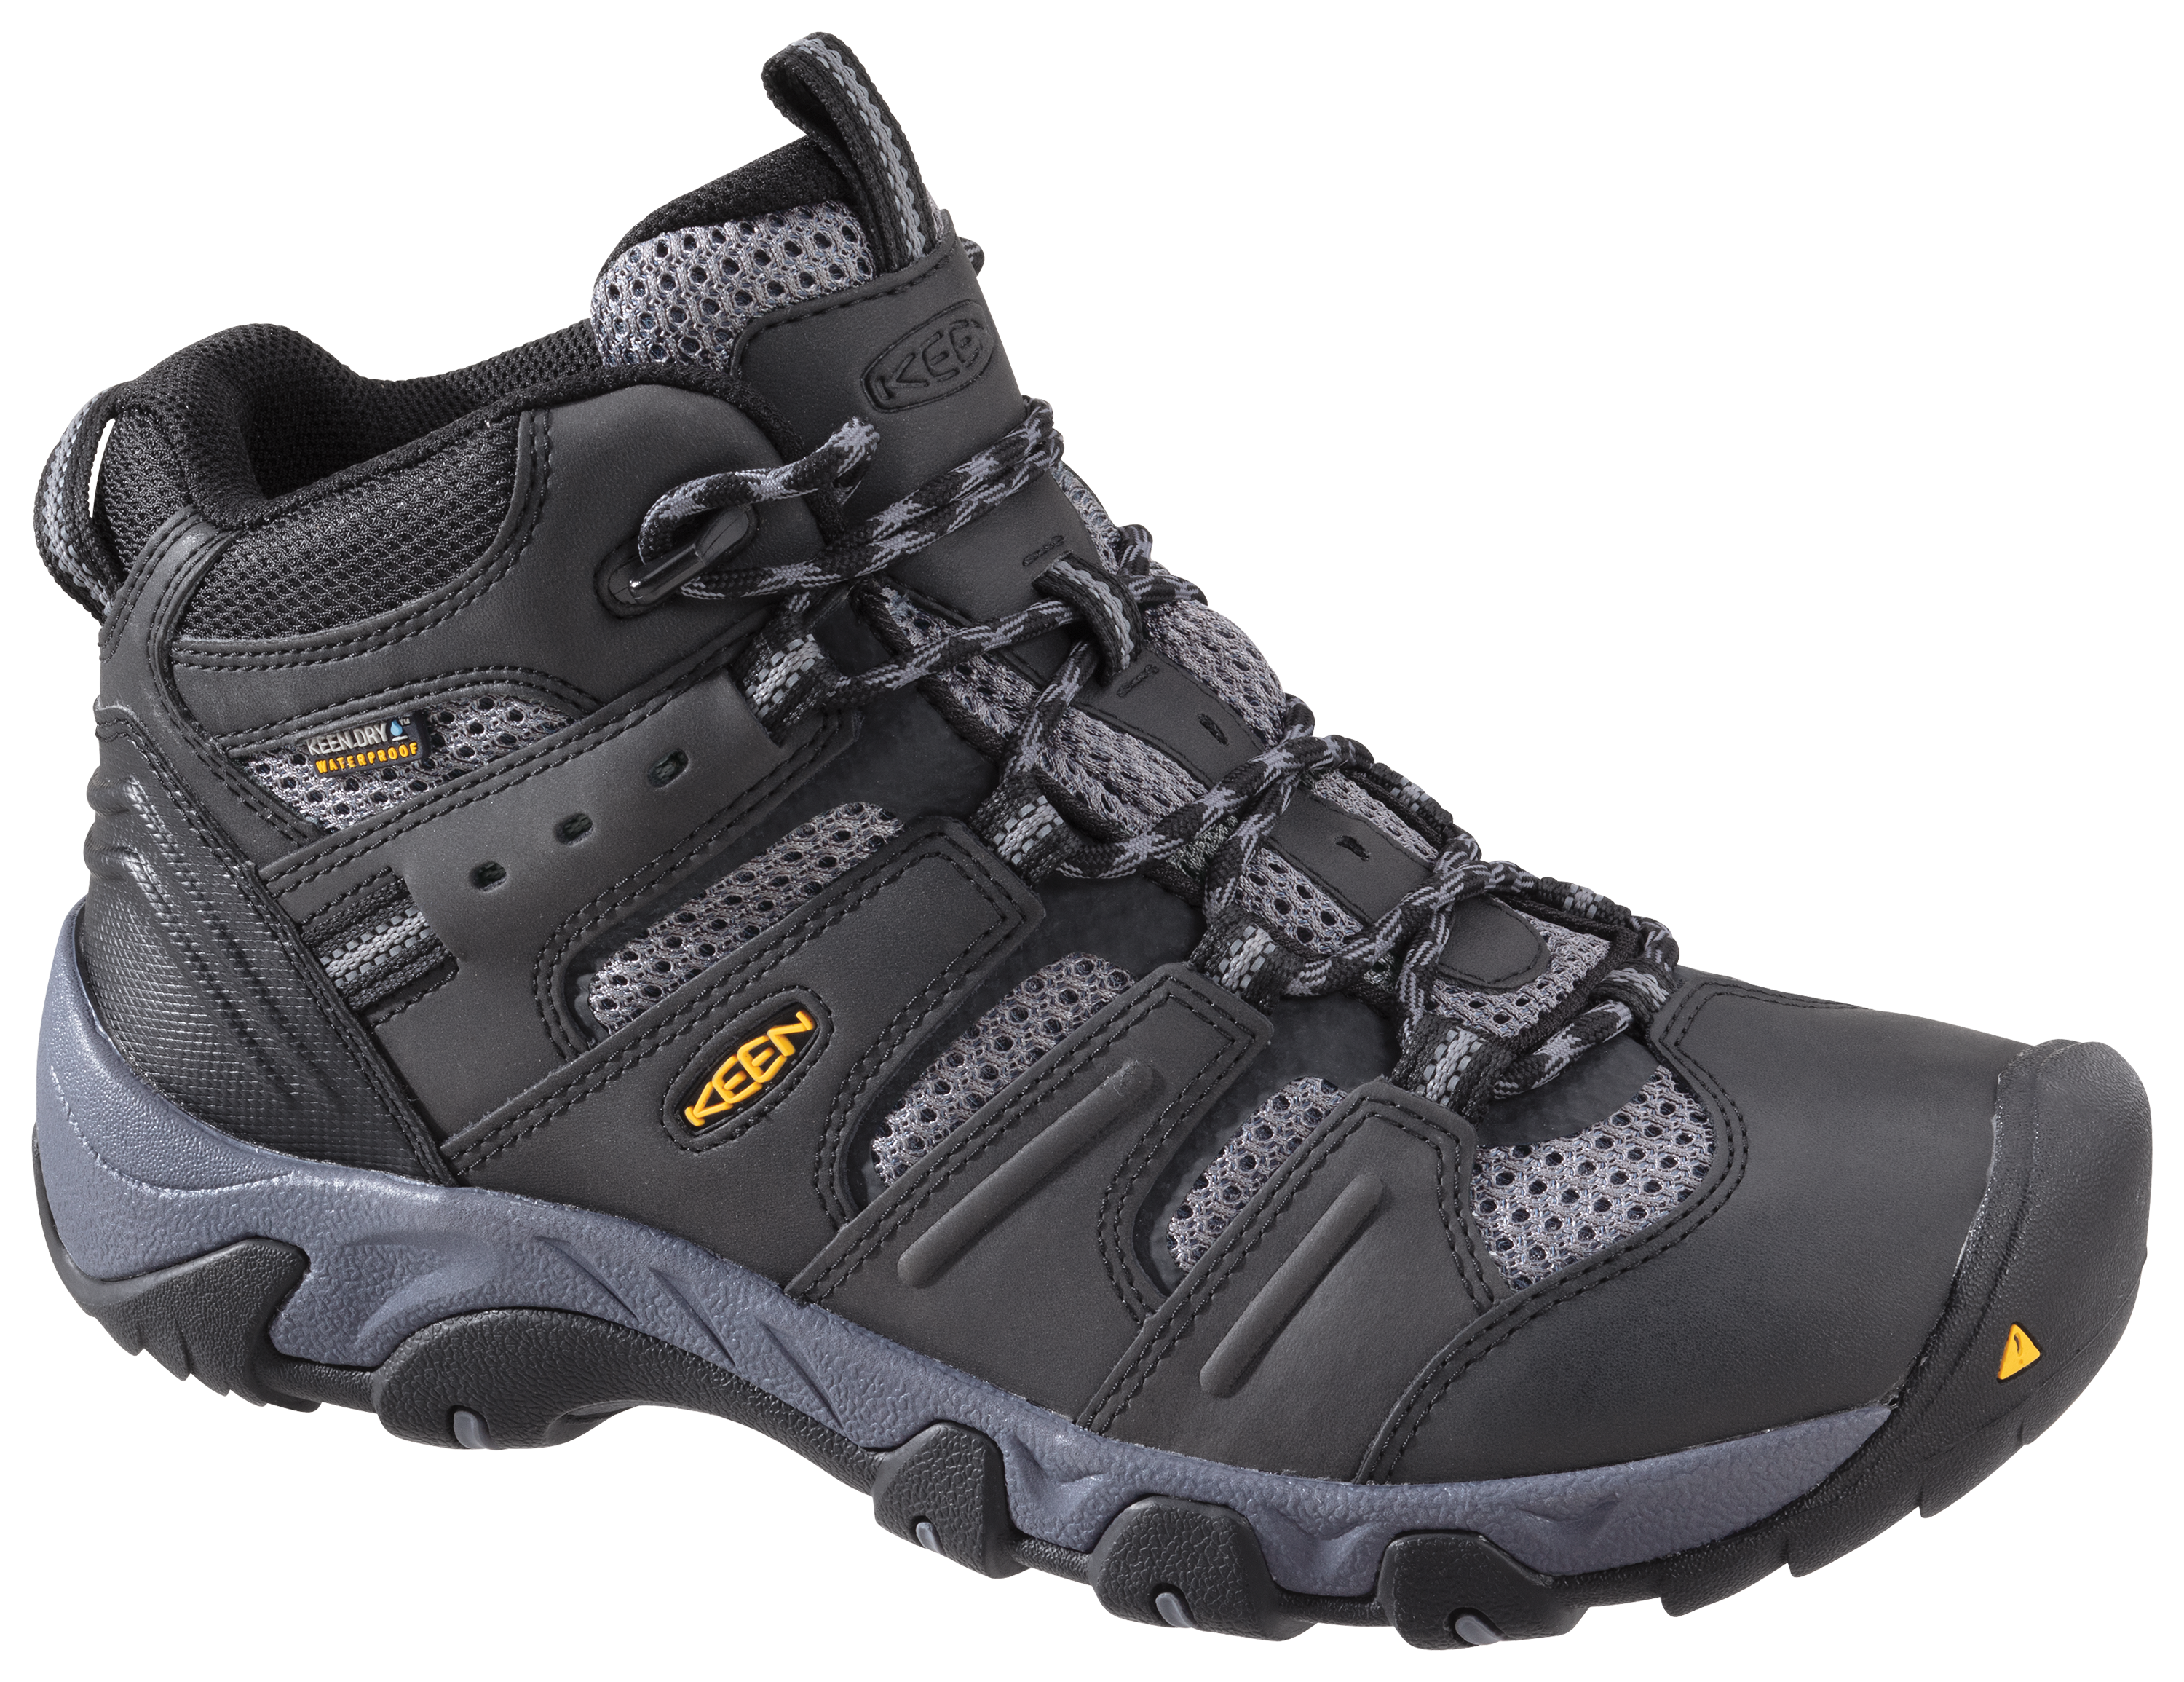 KEEN Koven Mid Waterproof Hiking Boots for Men - Black/Gray - 8.5M